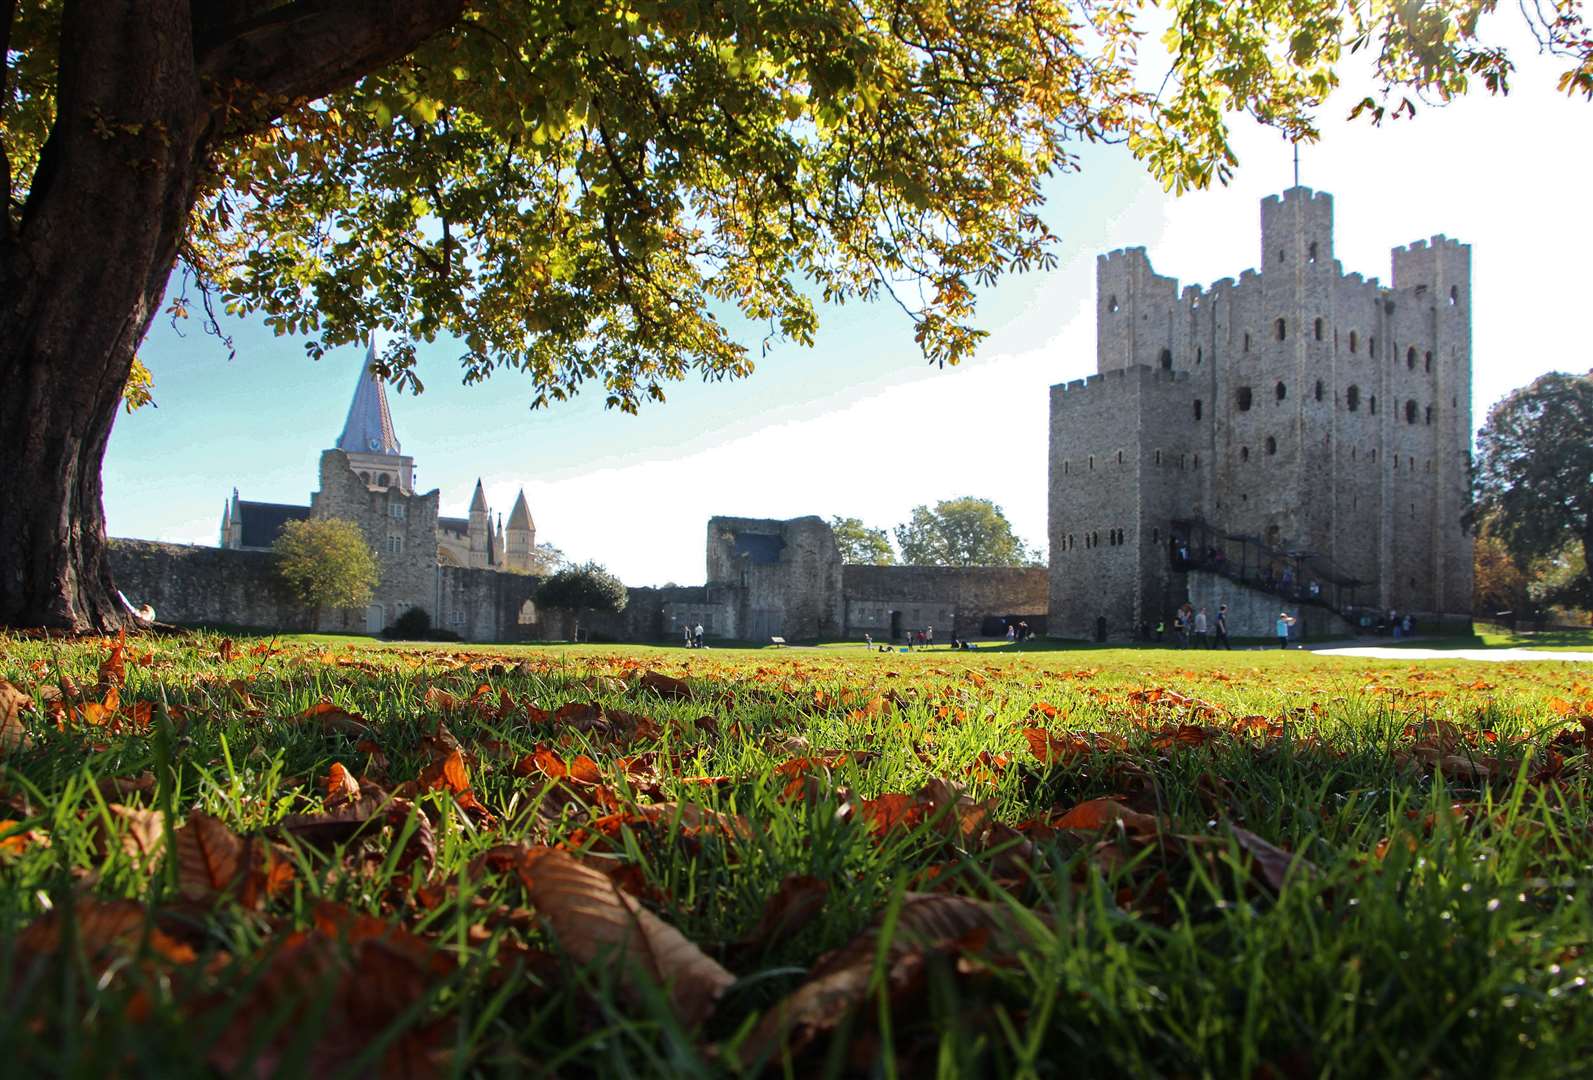 Rochester Castle Gardens in the autumn sunshine